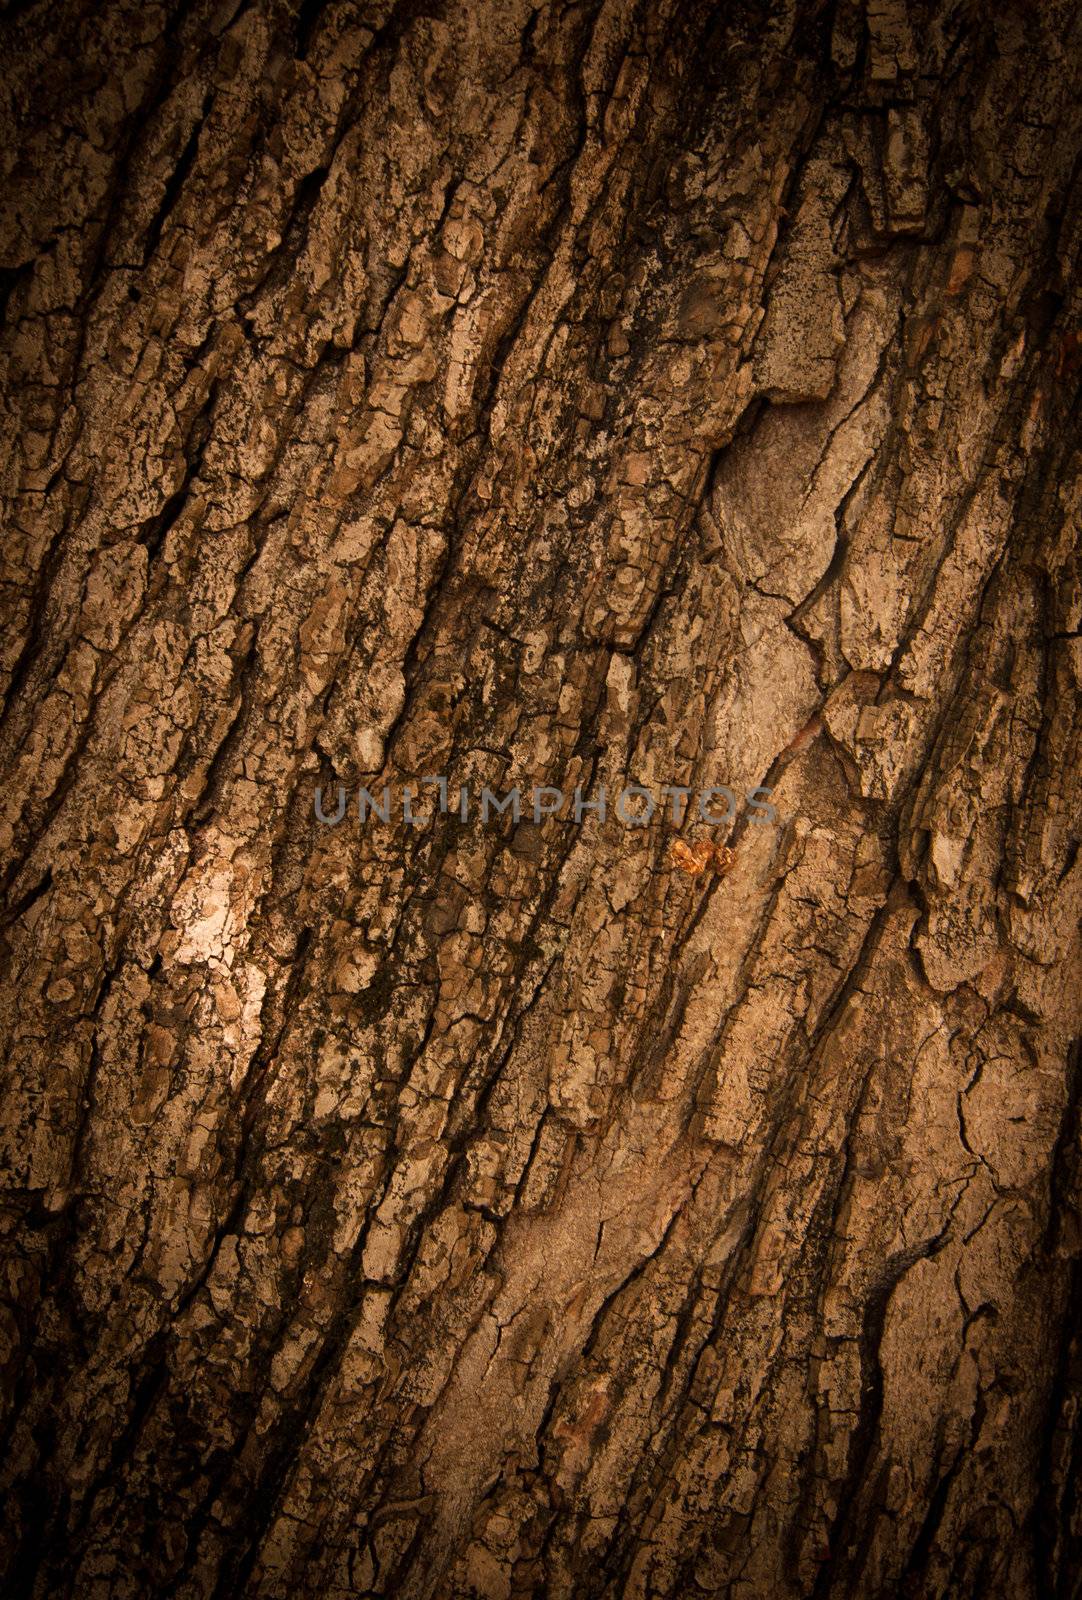 Bark of Oak Tree. Texture. Close up